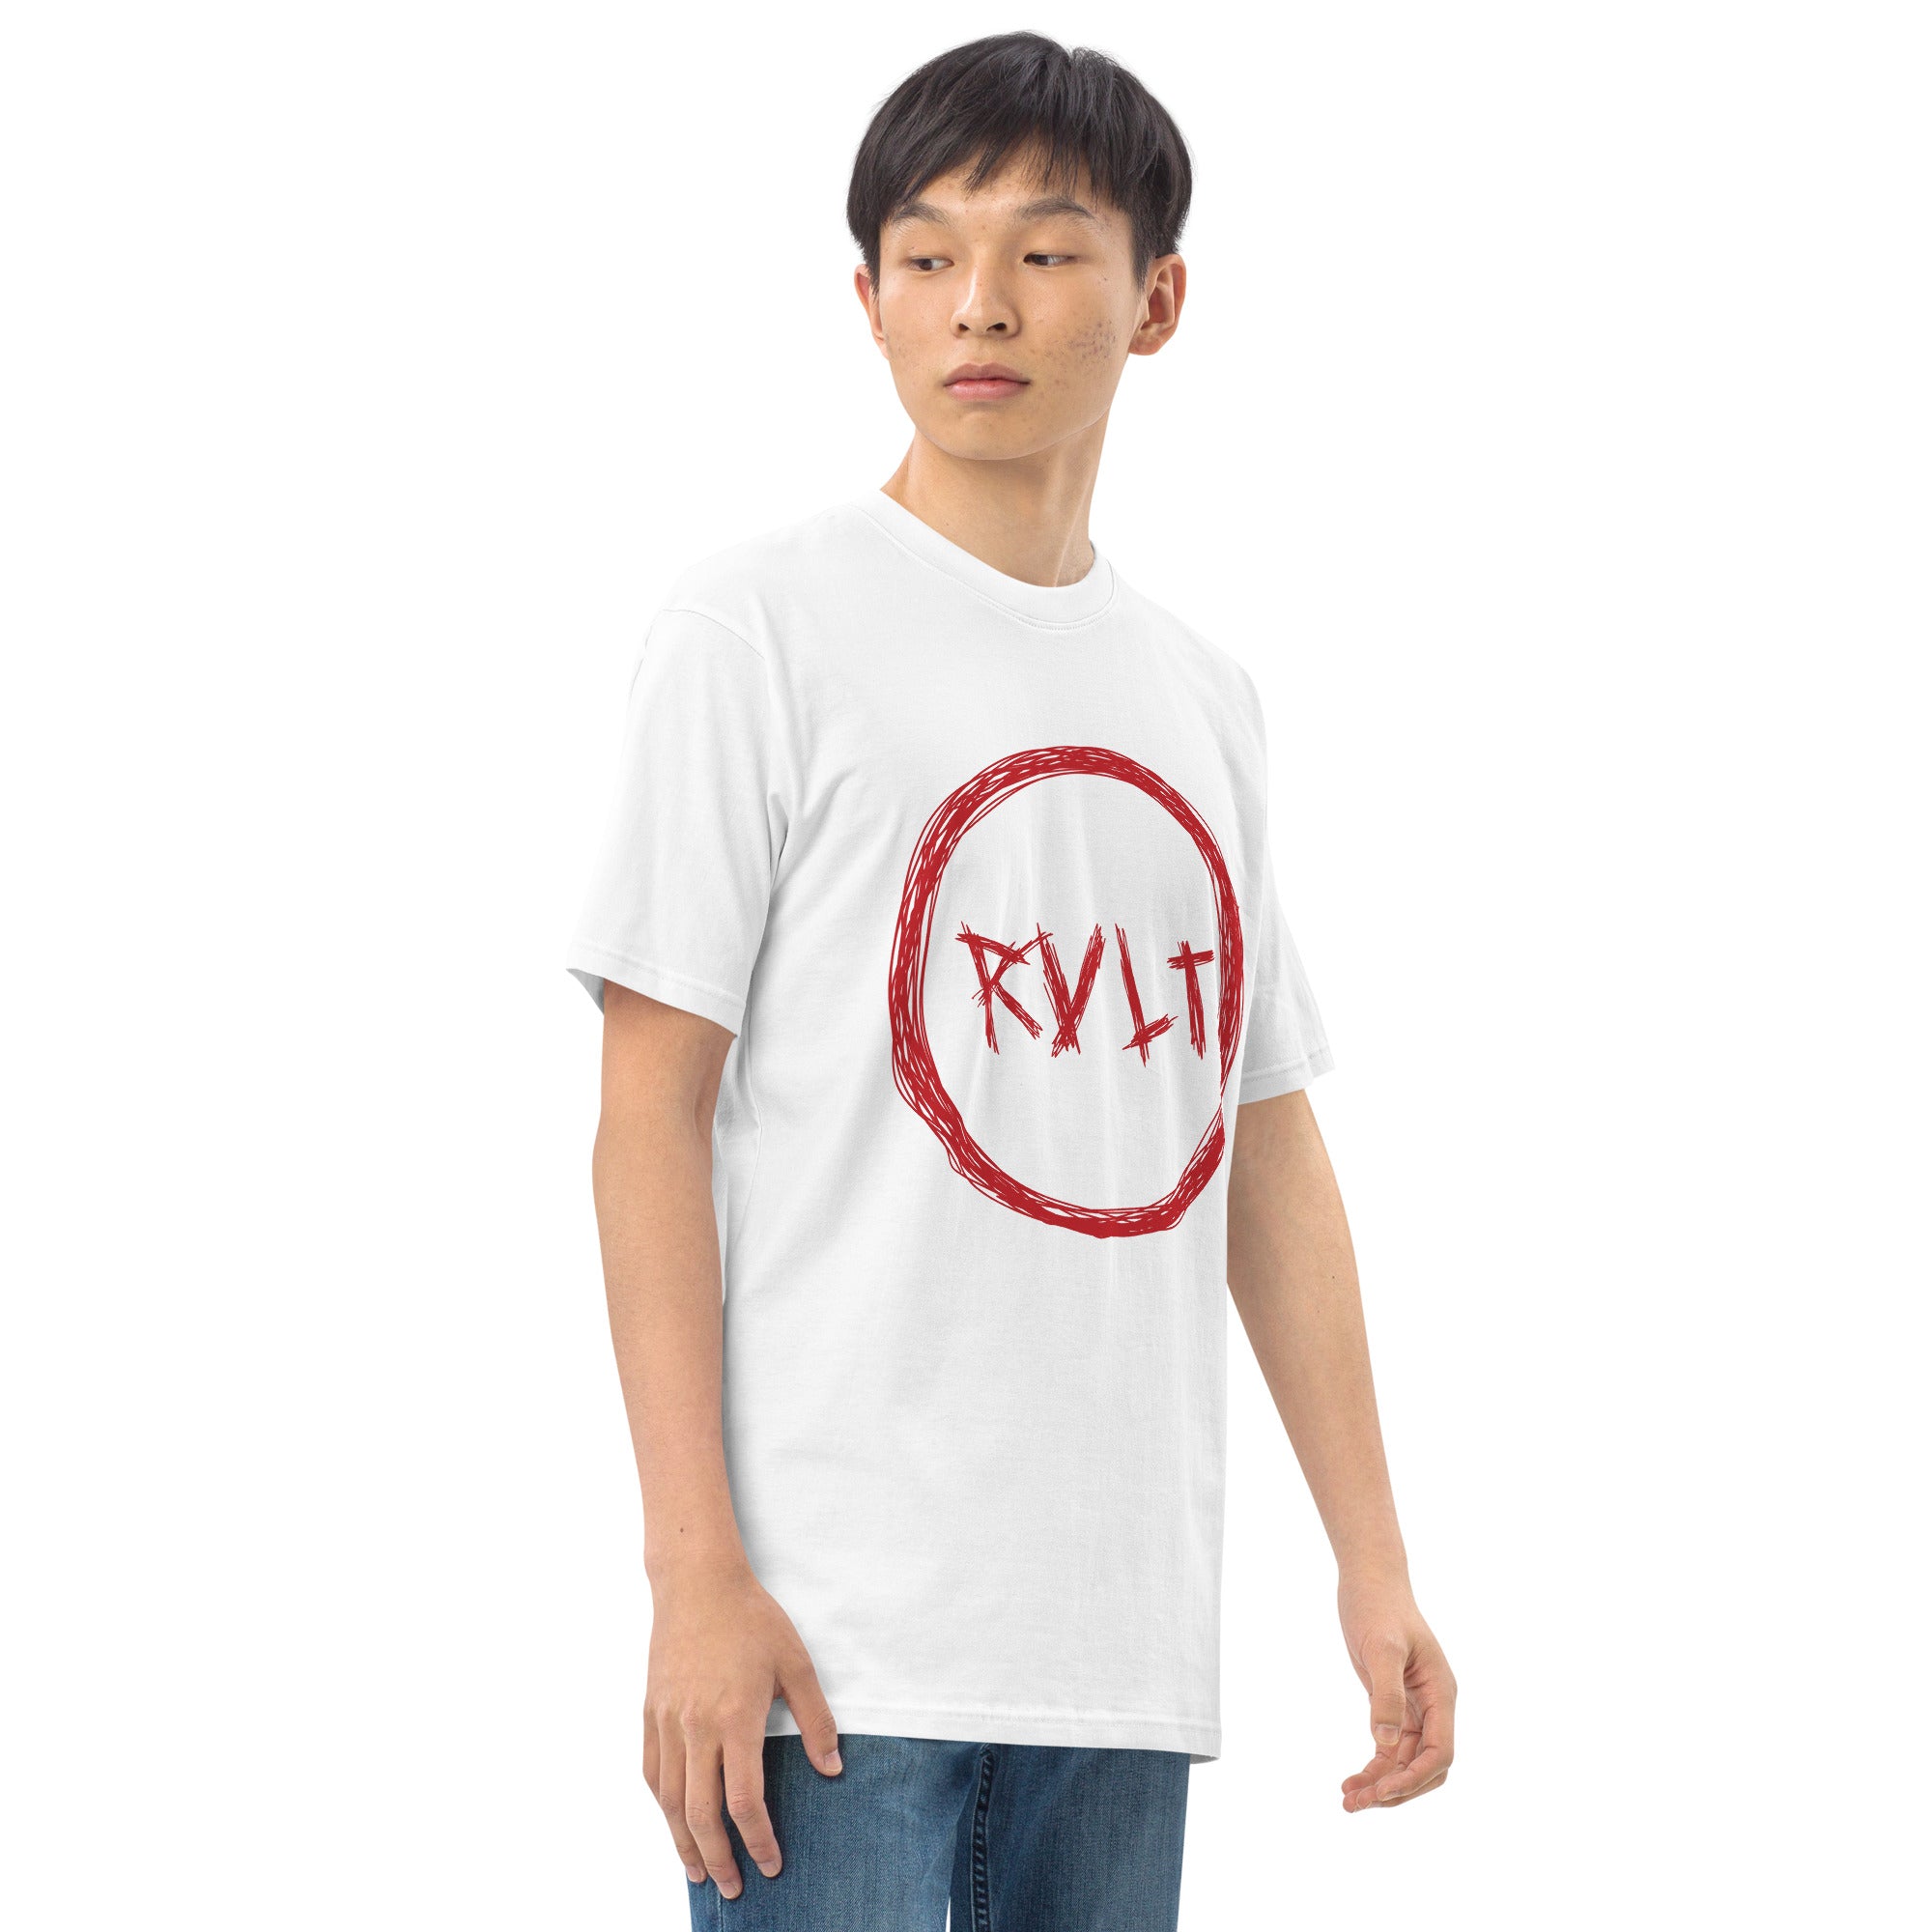 RVLT Men's Tshirt - NFTees365